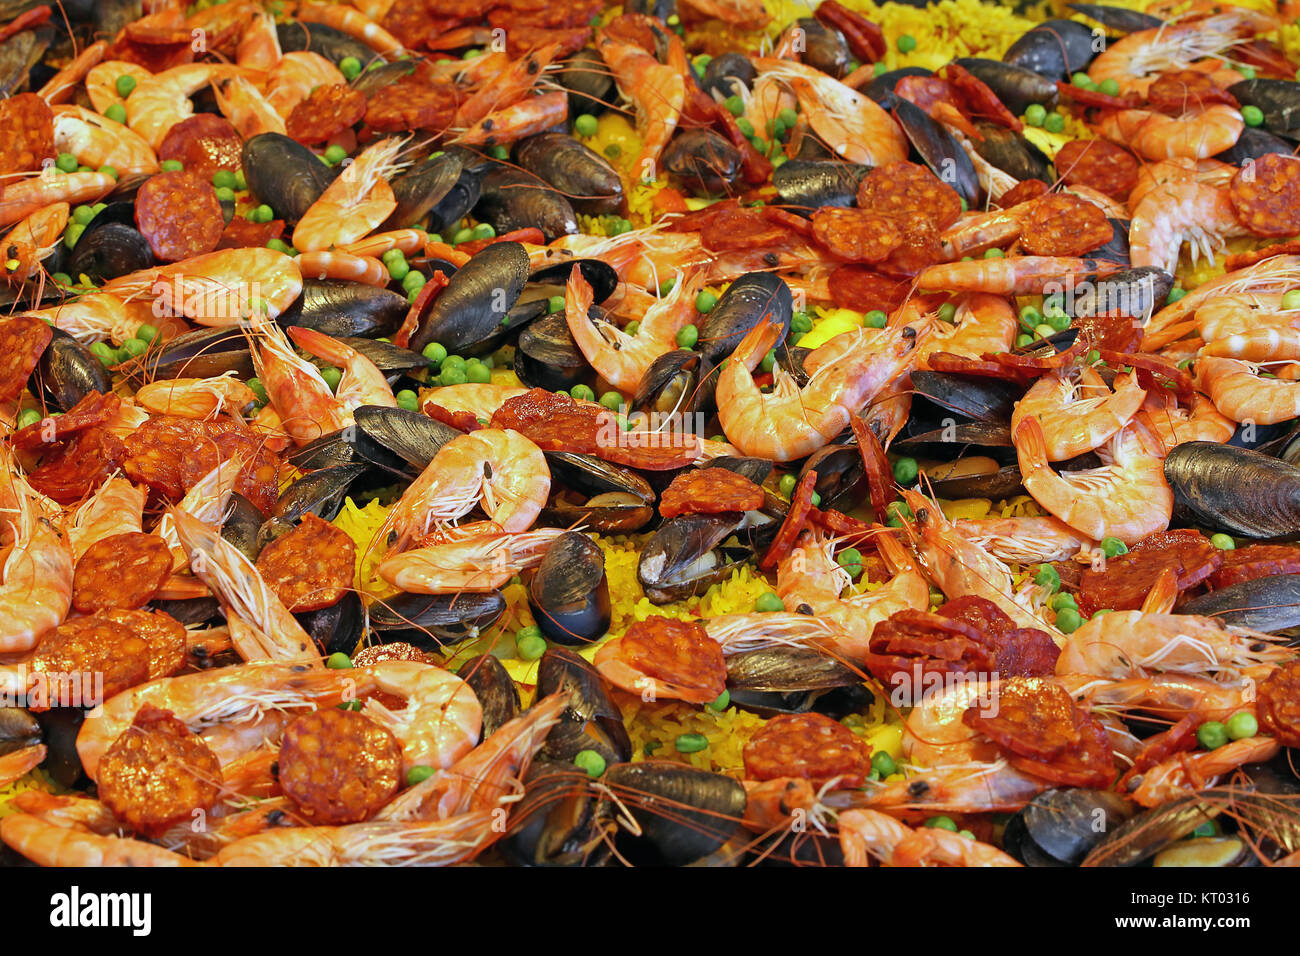 huge paella with seafood and garlic sausage Stock Photo